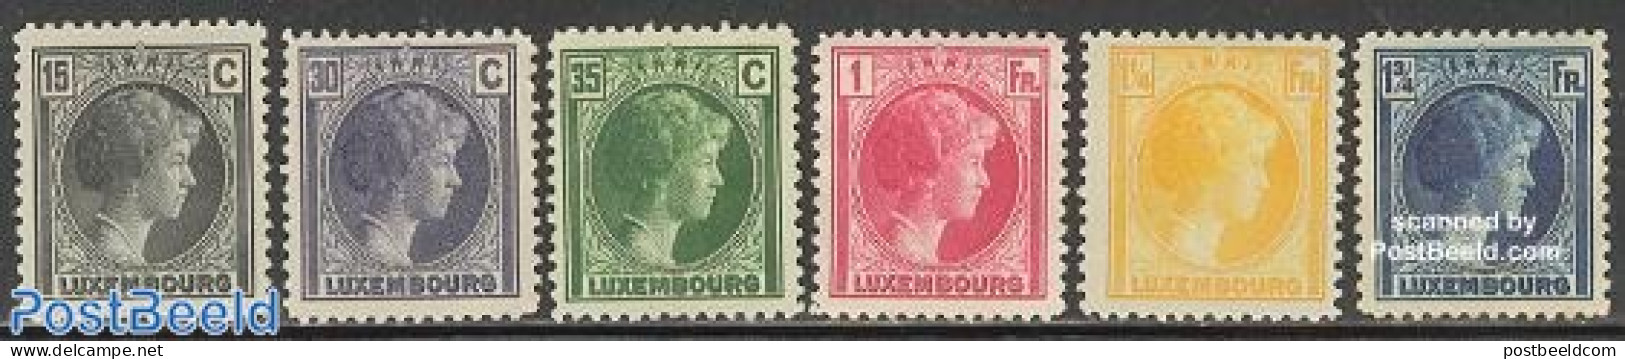 Luxemburg 1930 Definitives 6v, Unused (hinged) - Ongebruikt